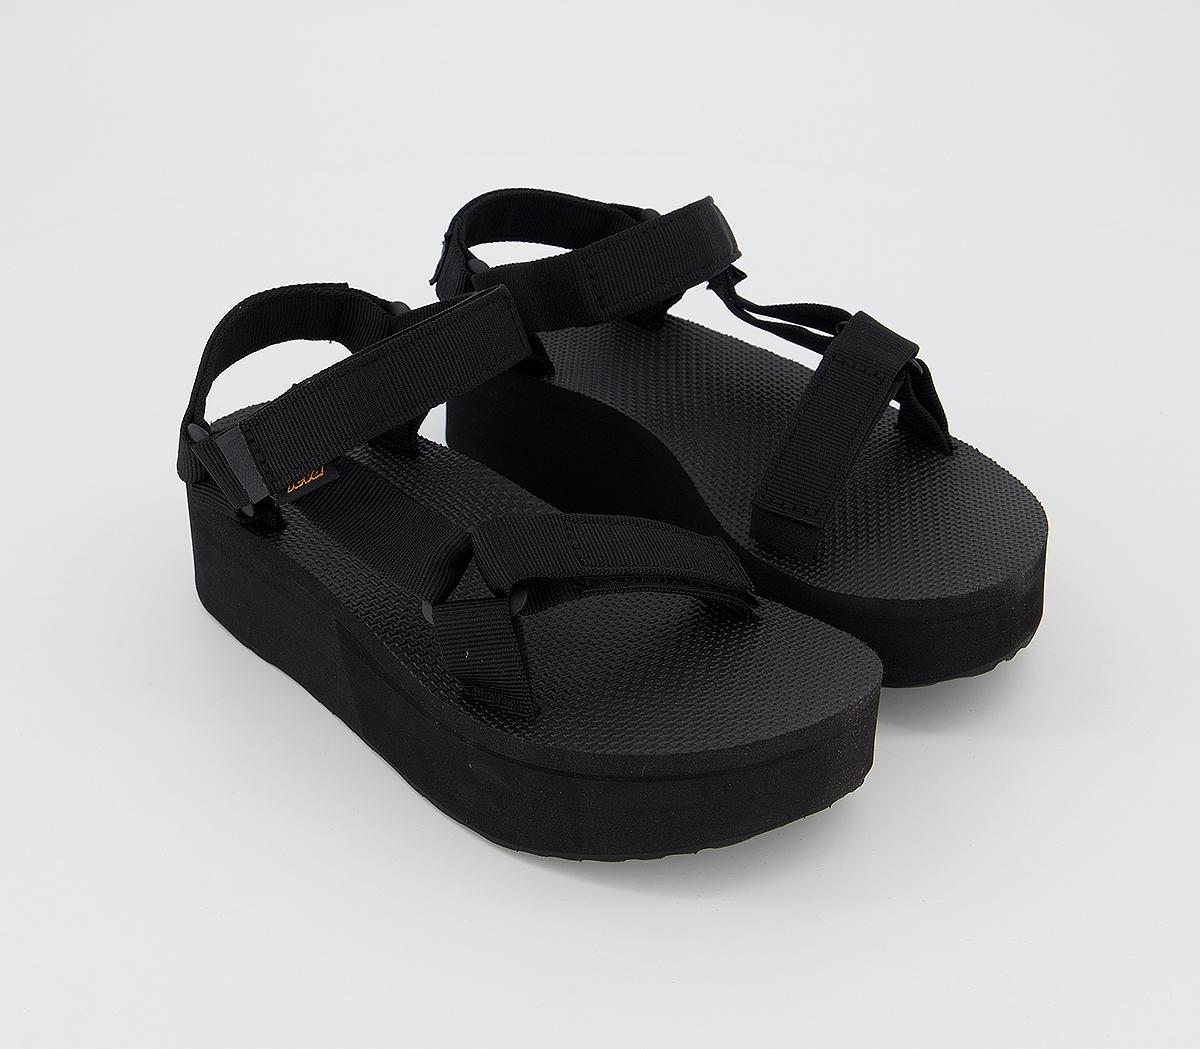 Teva Flatform Universal Sandals Black - Women’s Sandals